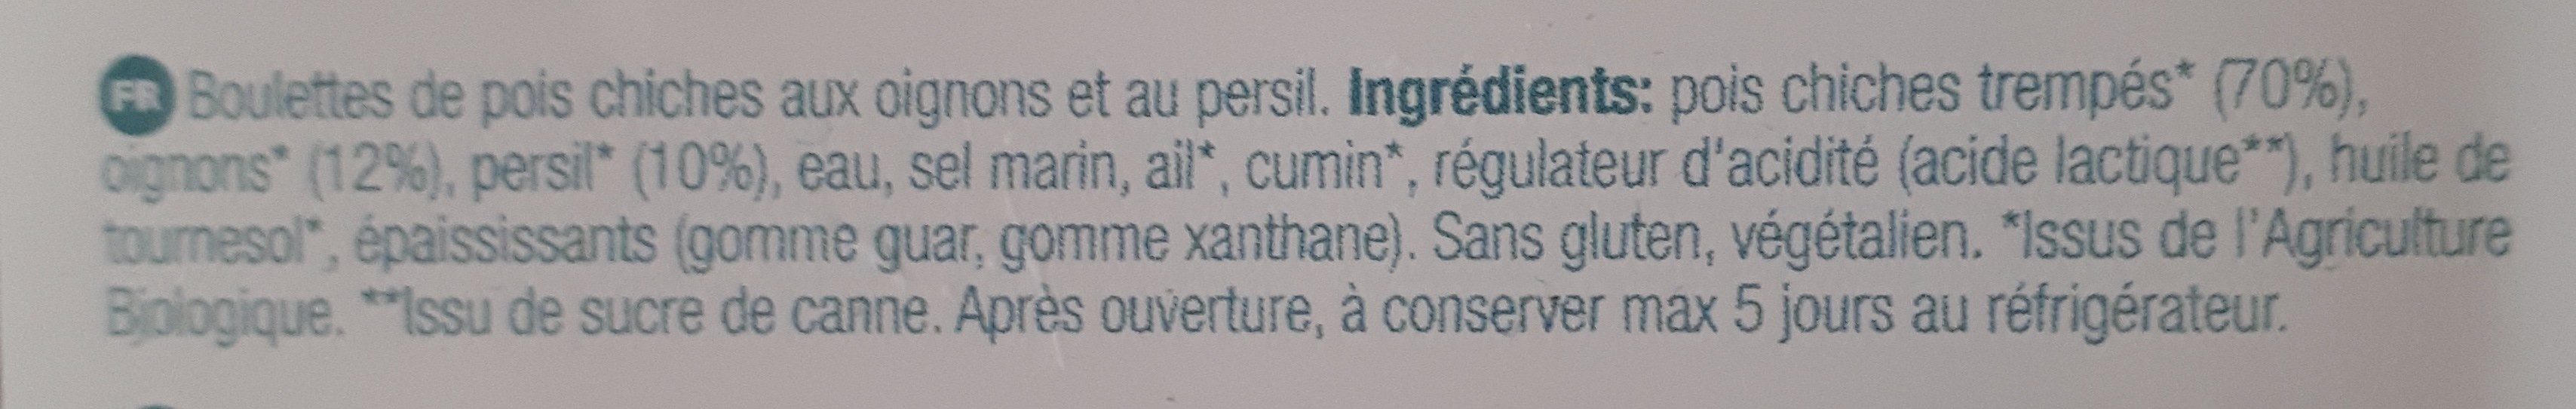 Mini falafel - Ingredients - fr